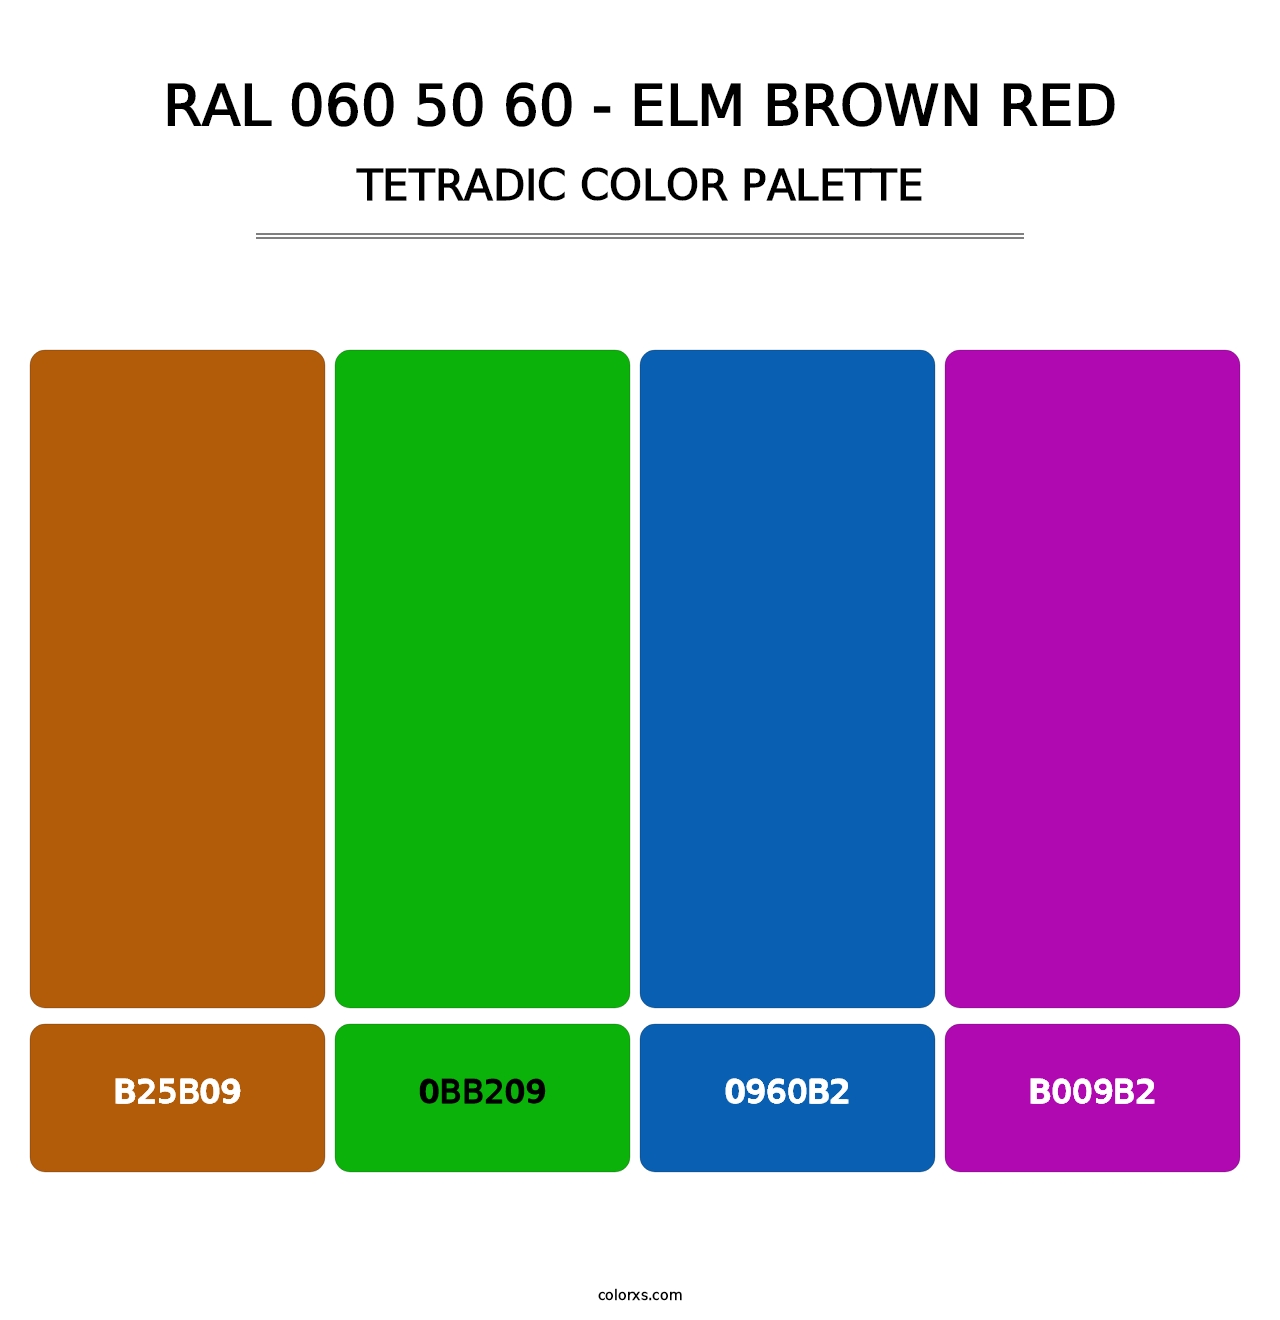 RAL 060 50 60 - Elm Brown Red - Tetradic Color Palette